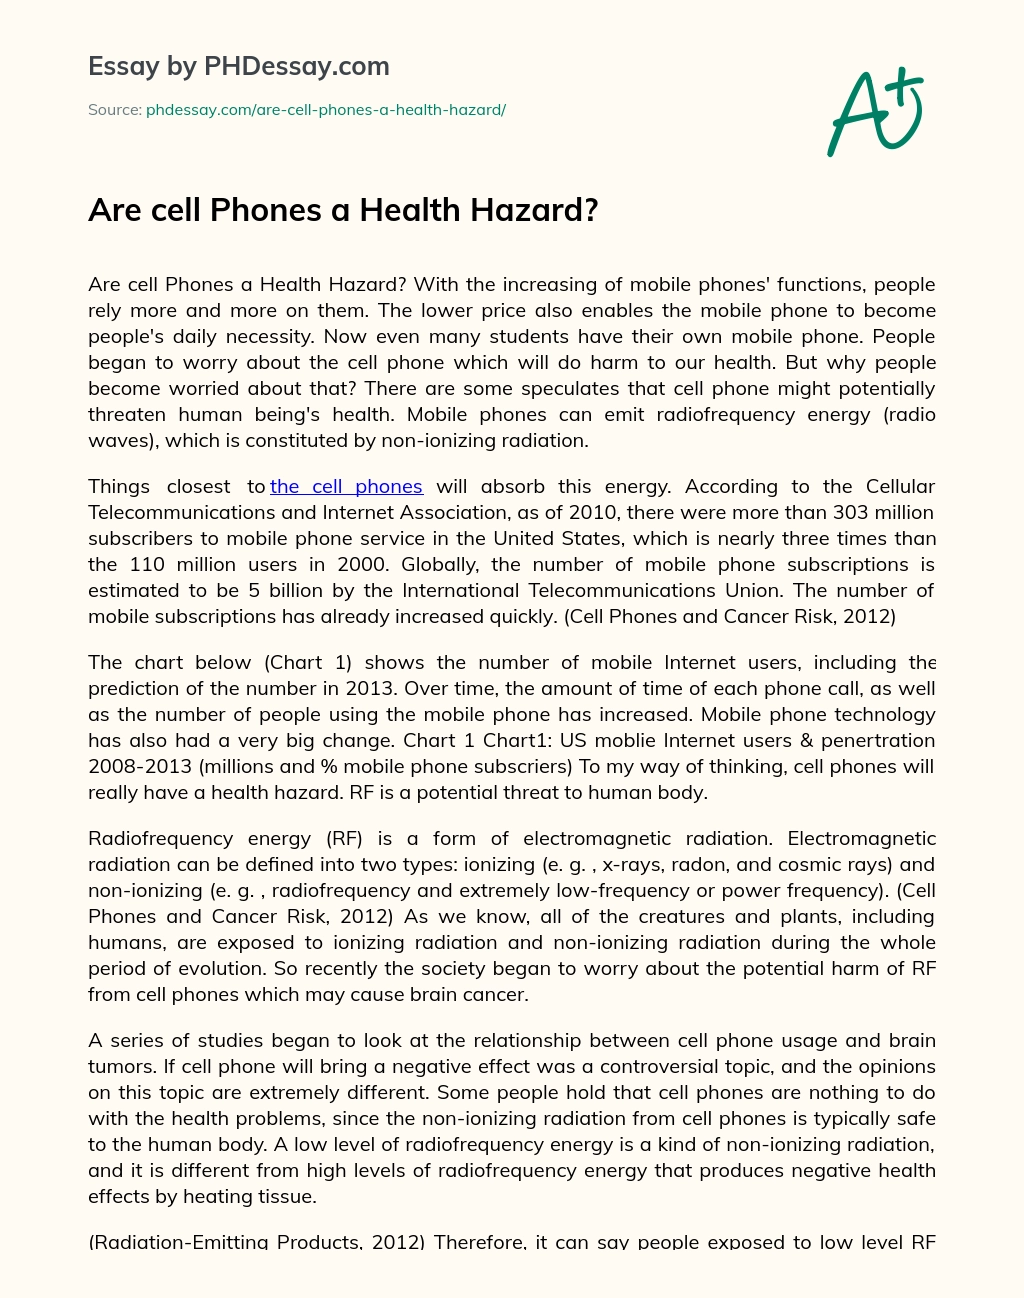 Are cell Phones a Health Hazard? essay